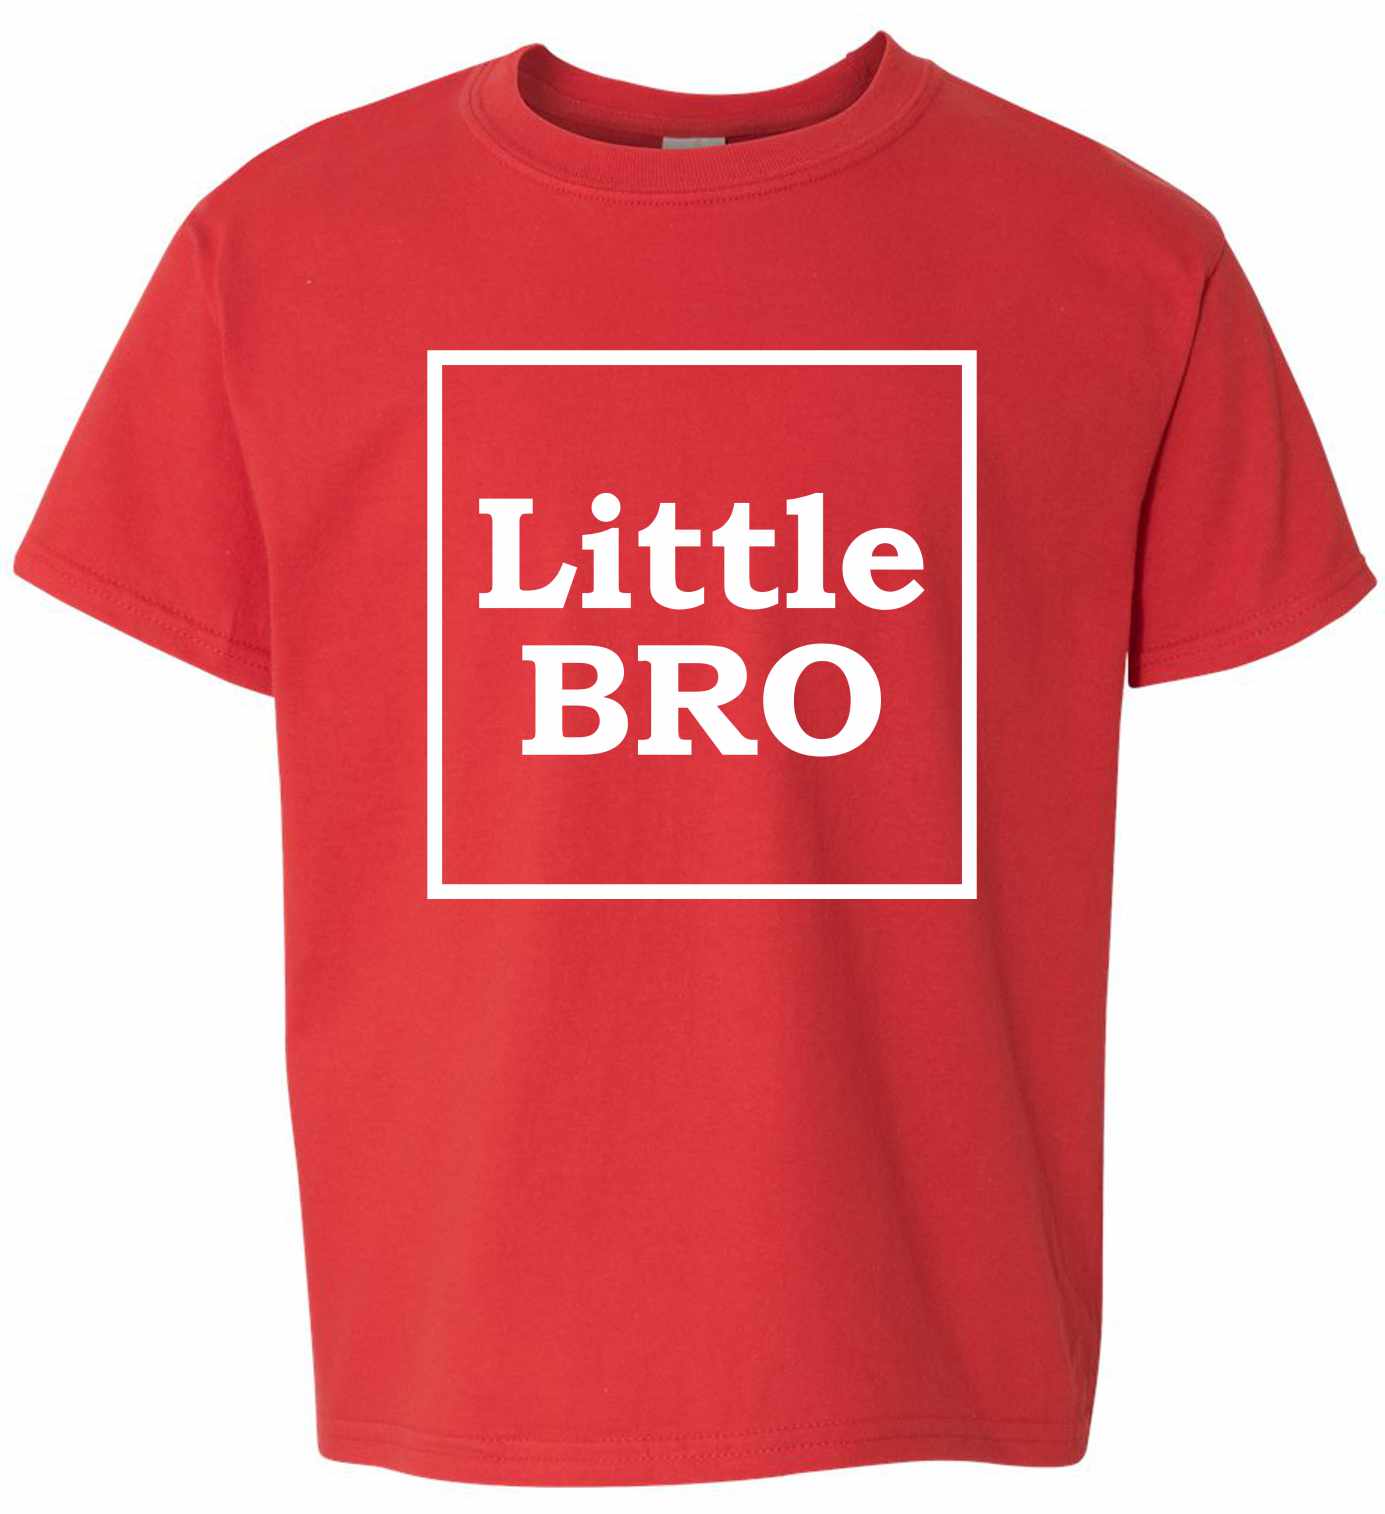 Little Bro on Kids T-Shirt